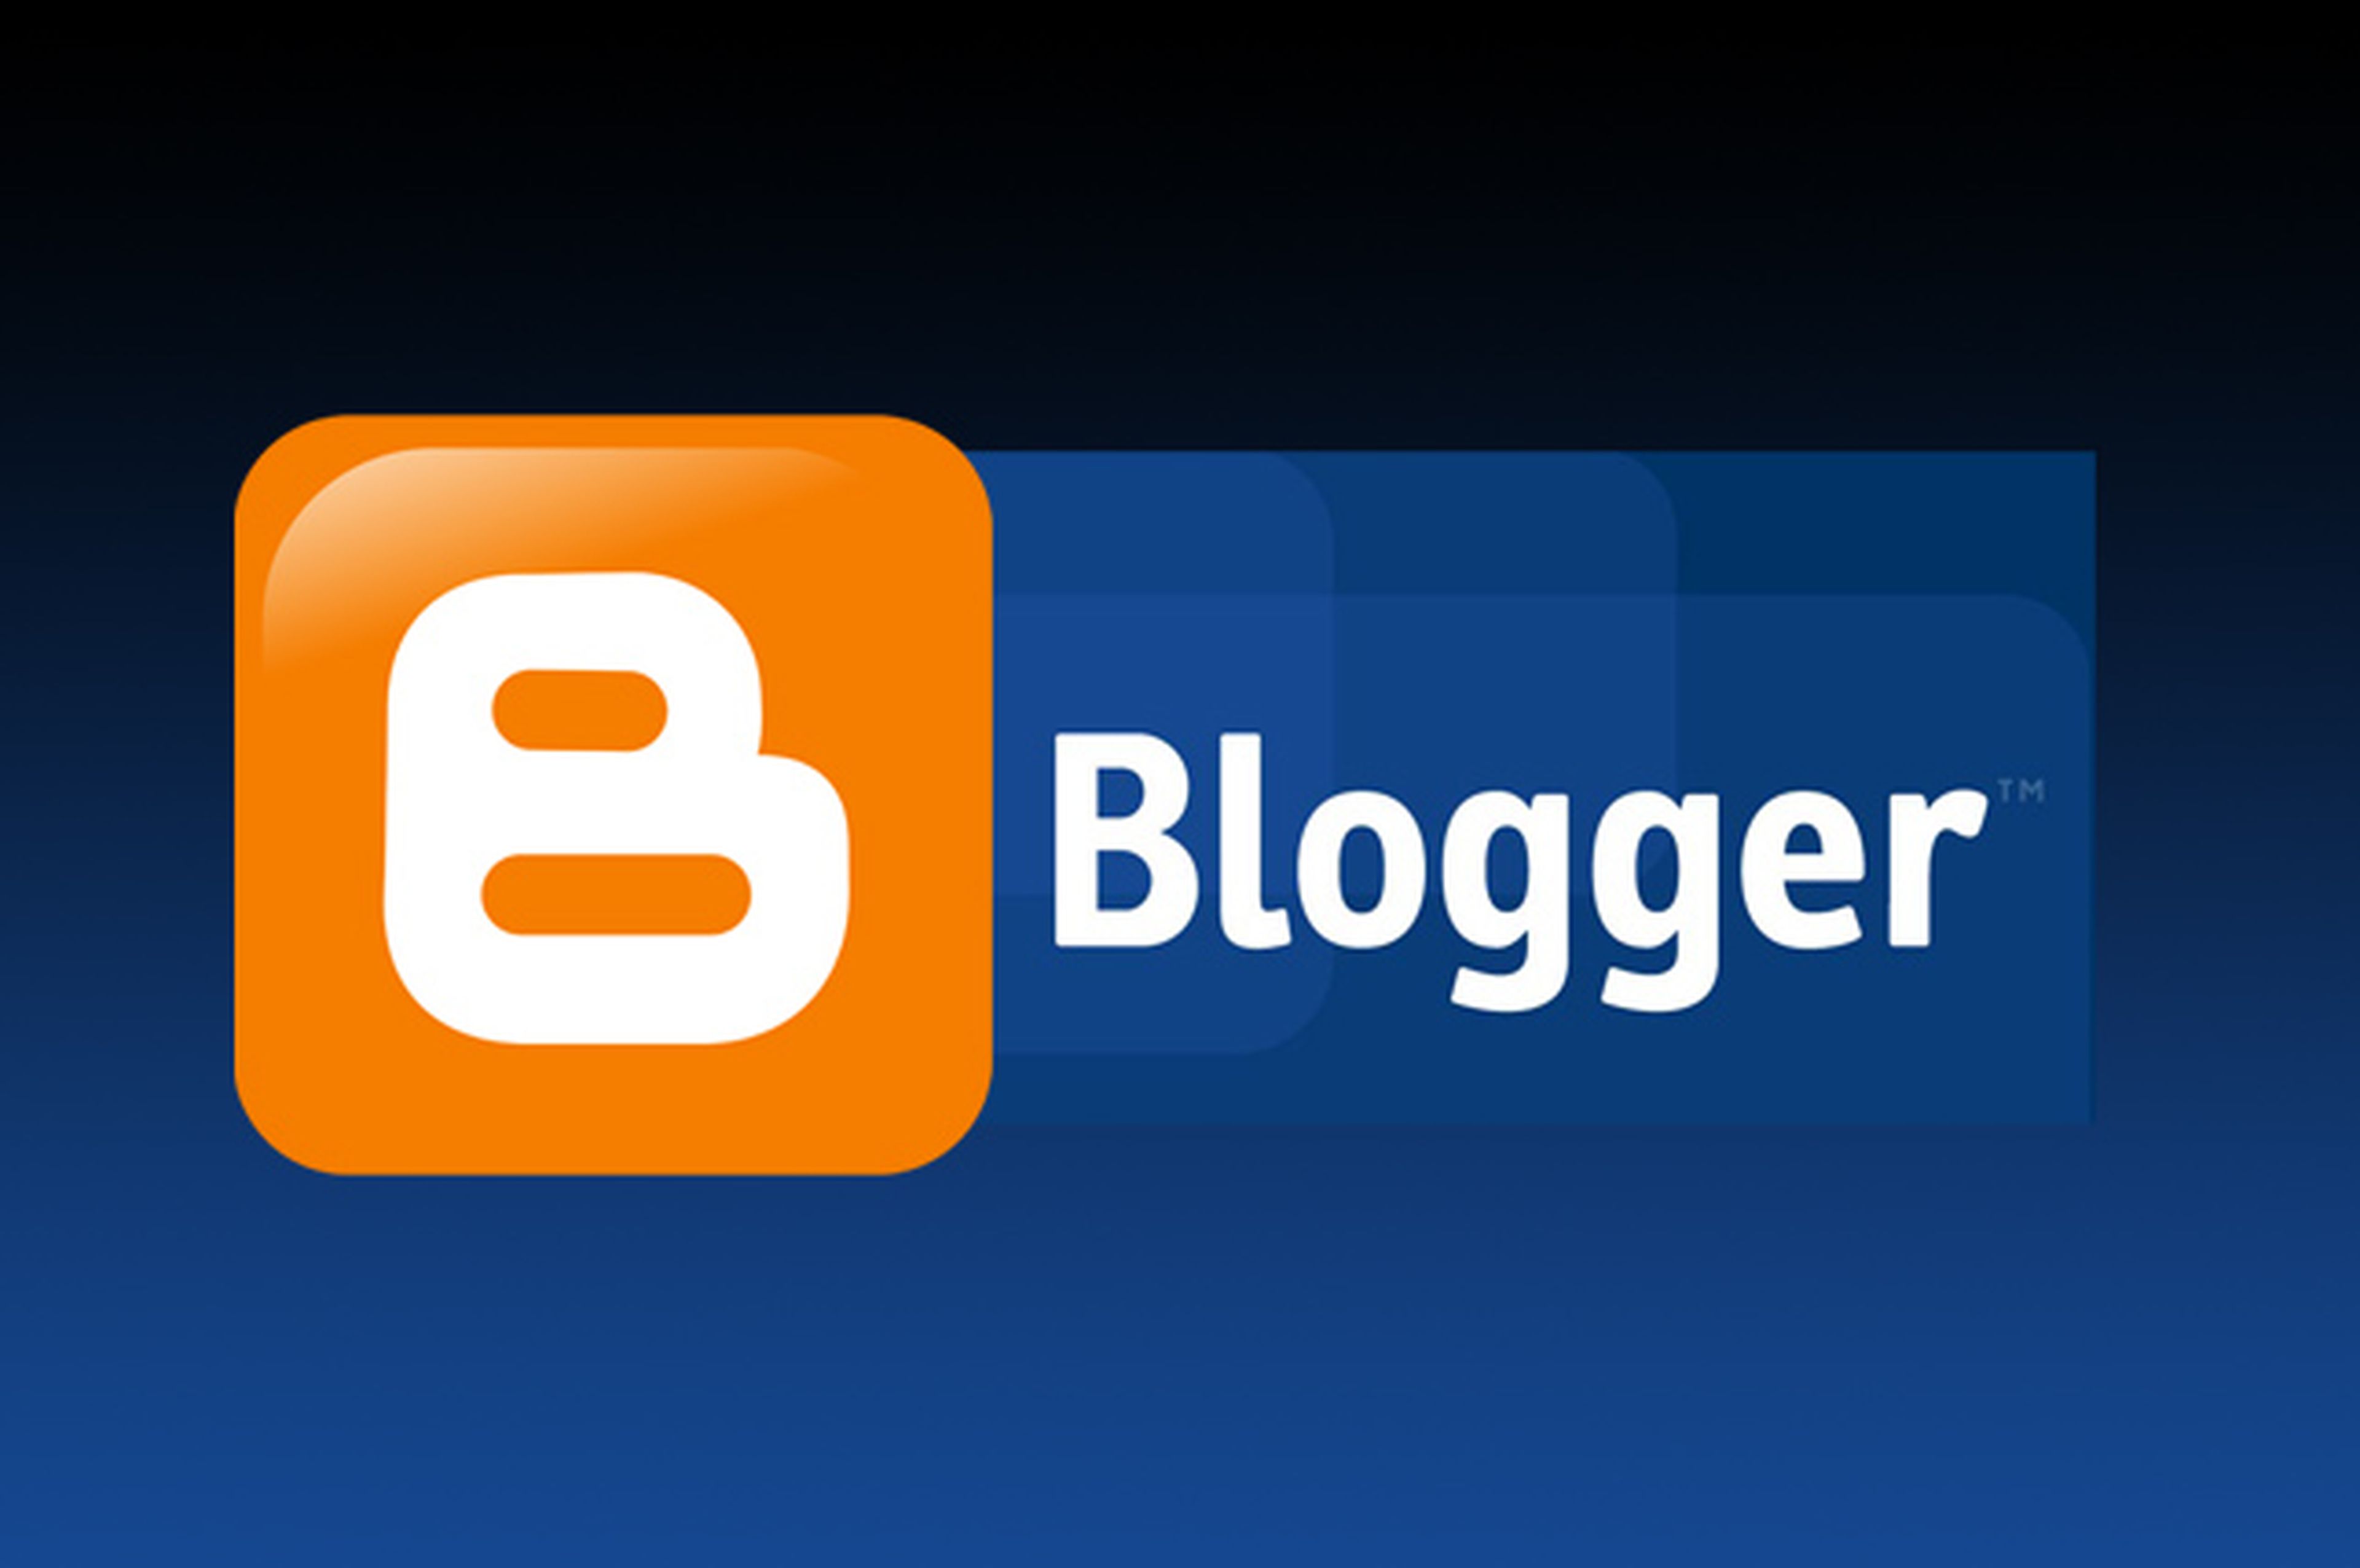 Primeros pasos en Blogger